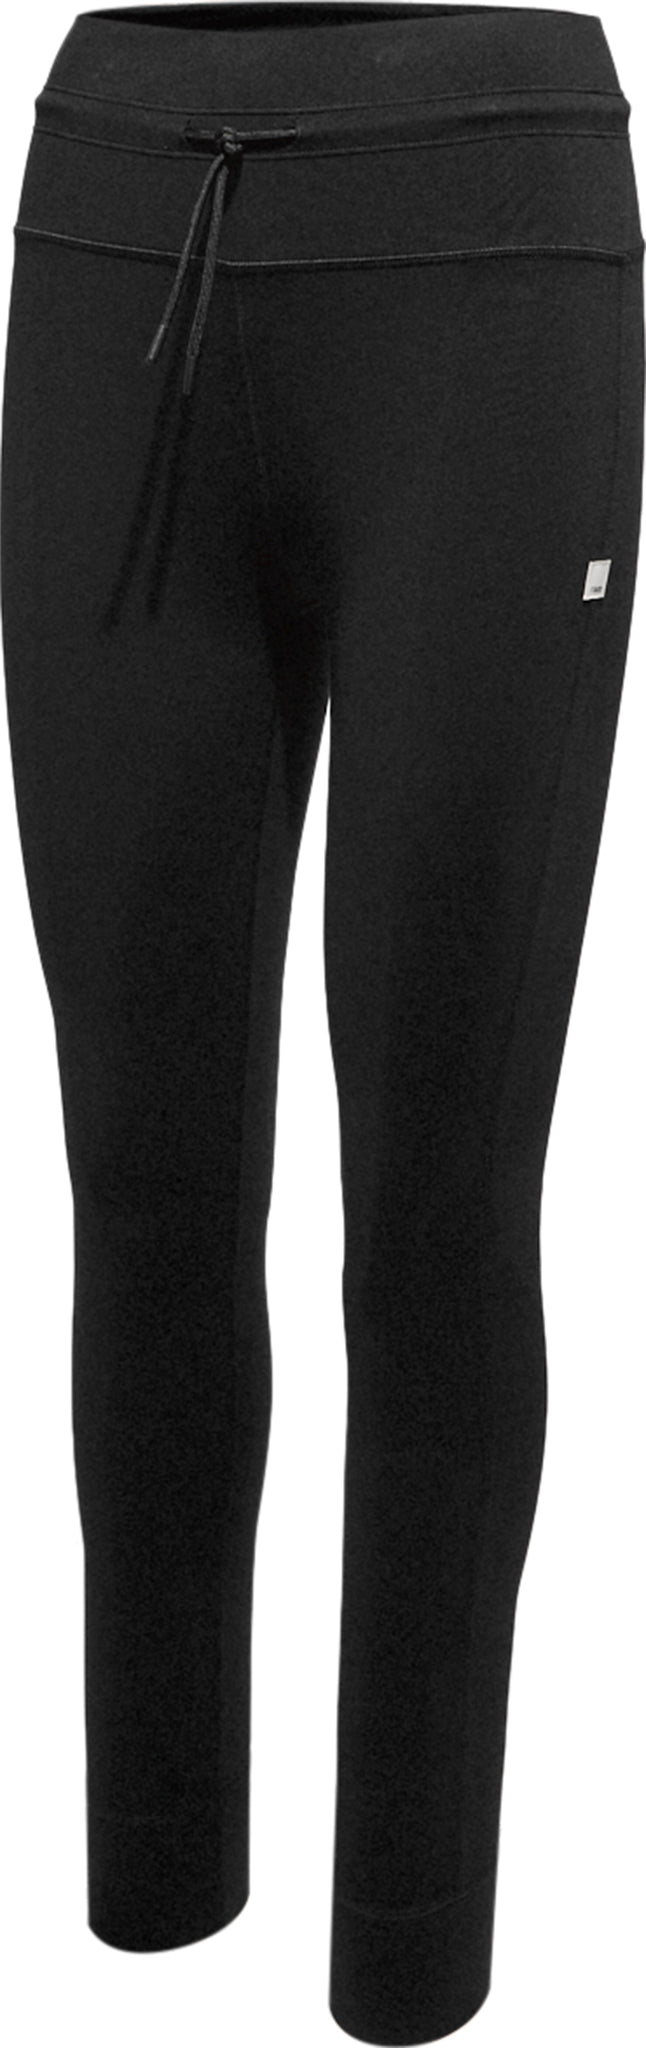 Womens Capri Pants Cropped Vuori Jogger 3/4 Sweatpants Drawstring